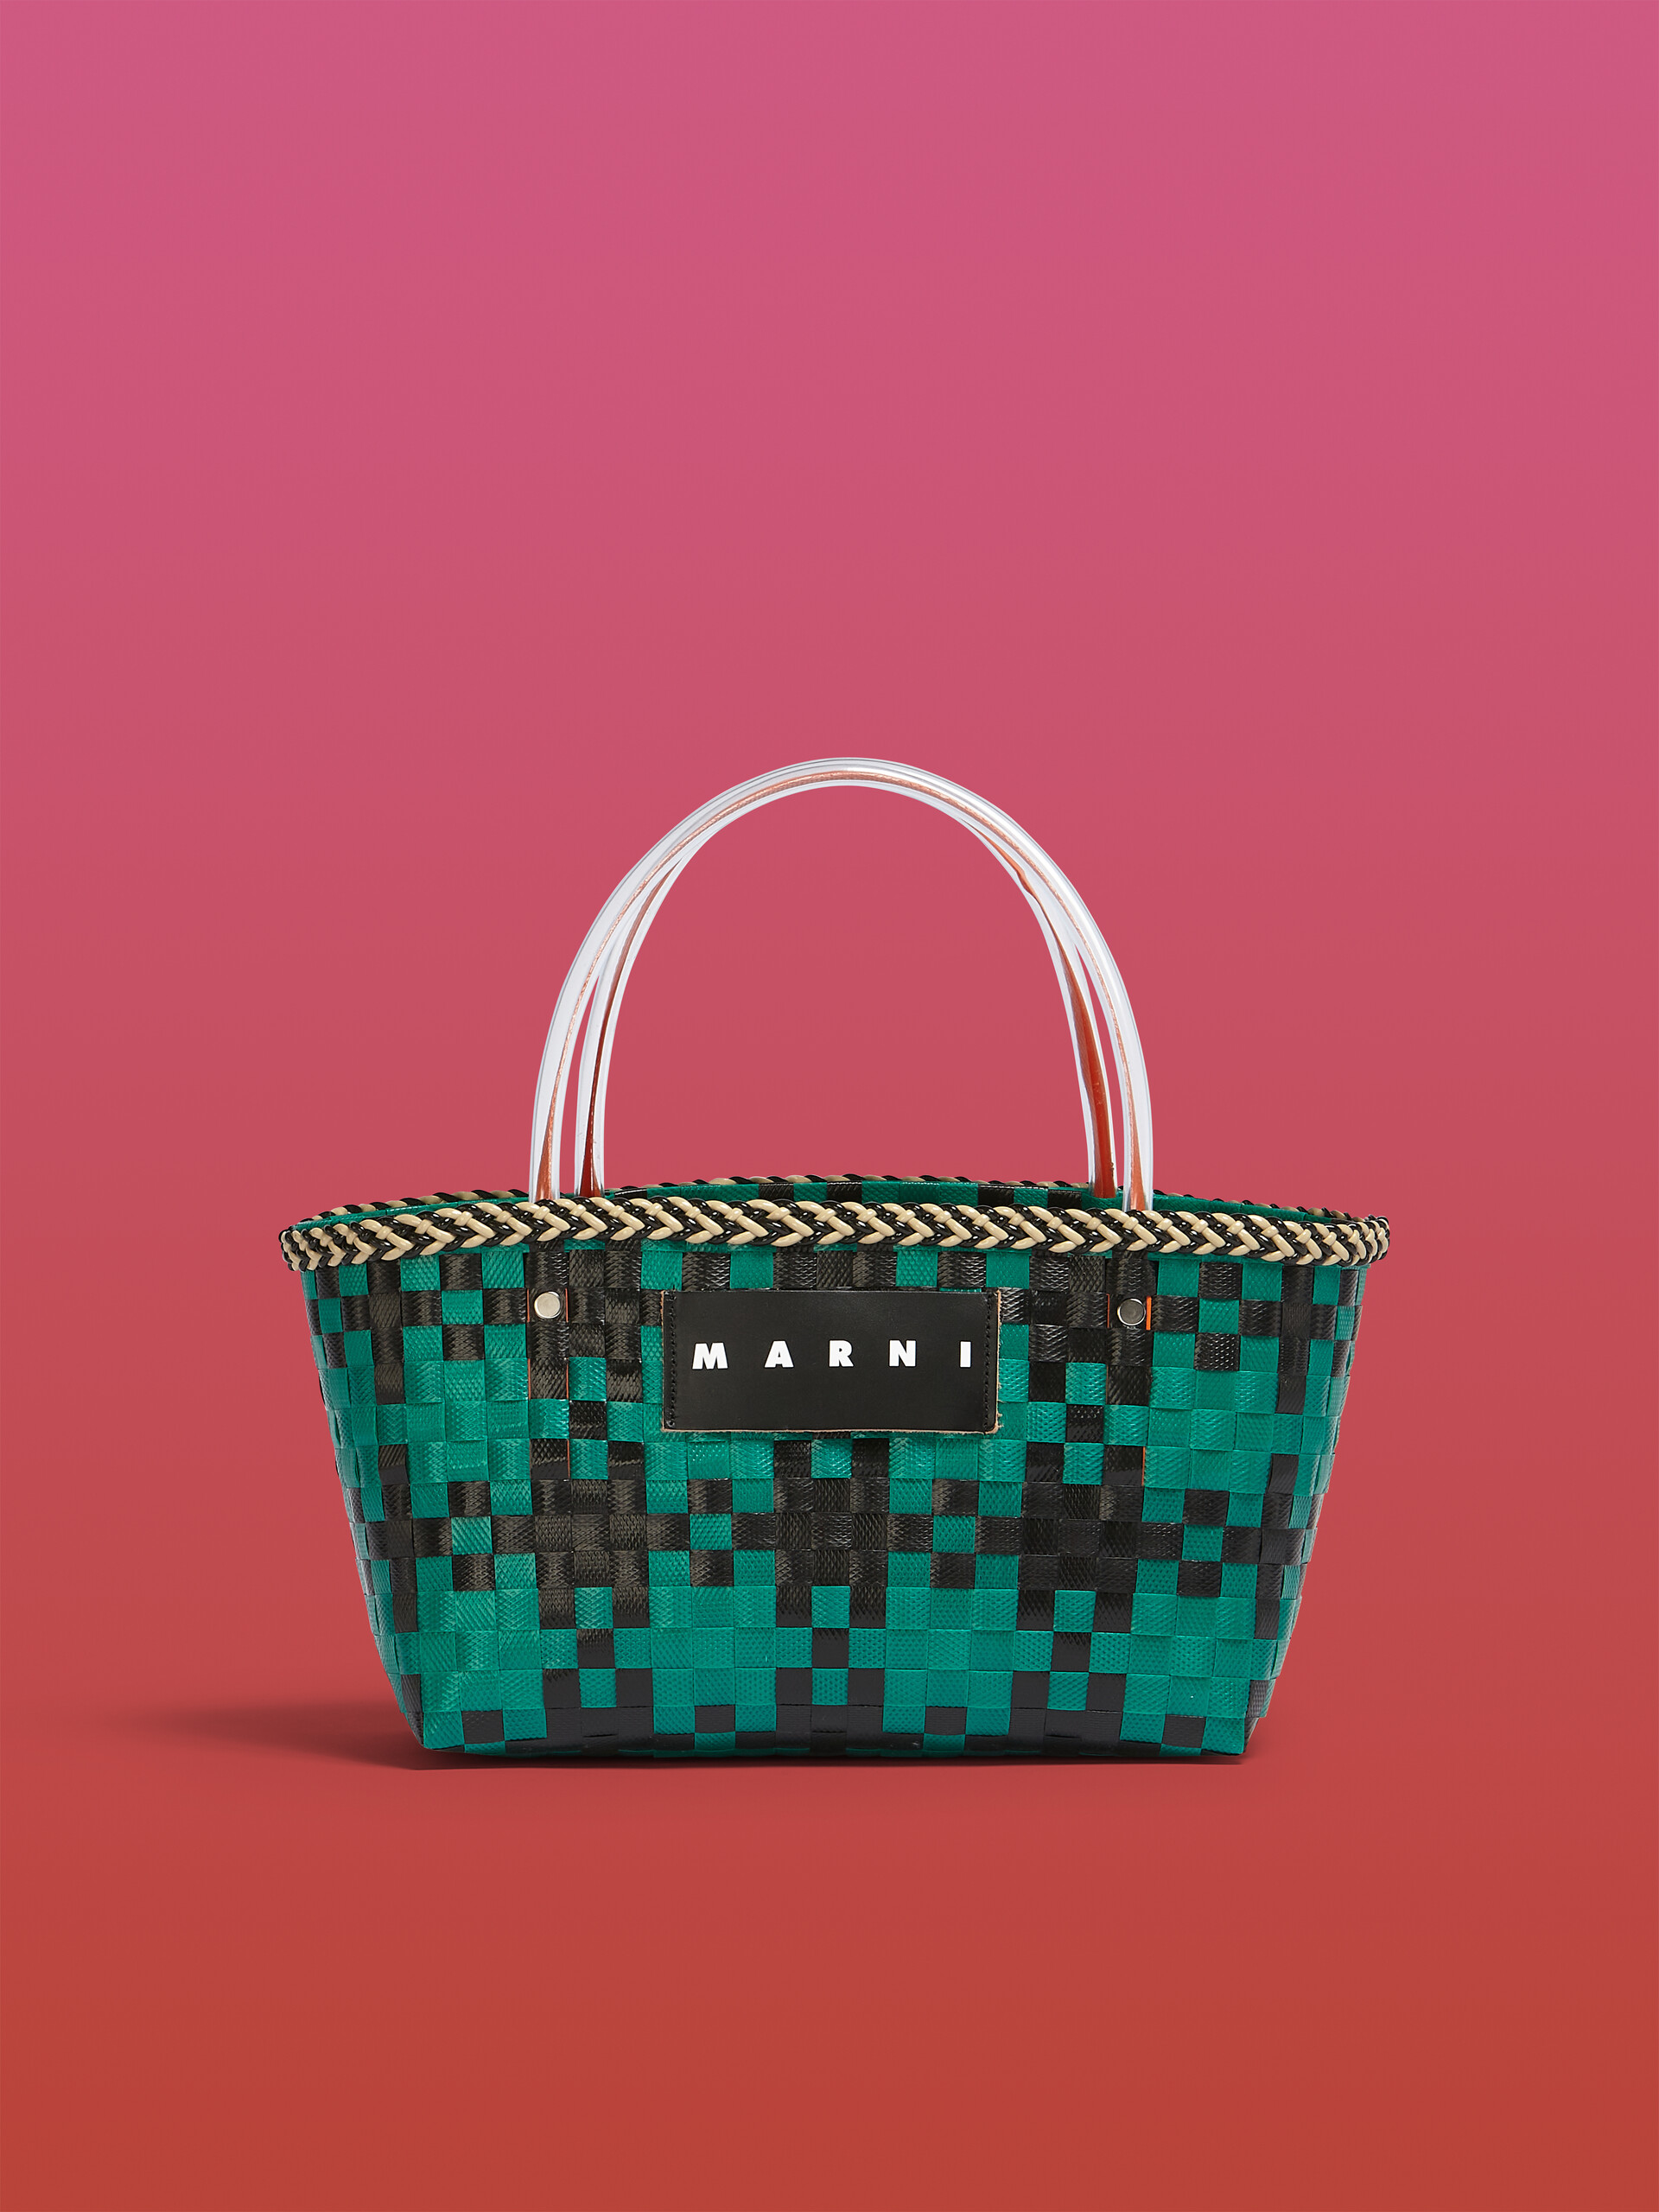 MARNI MARKET CHECK BAG in black and green tartan woven material - Bags - Image 1